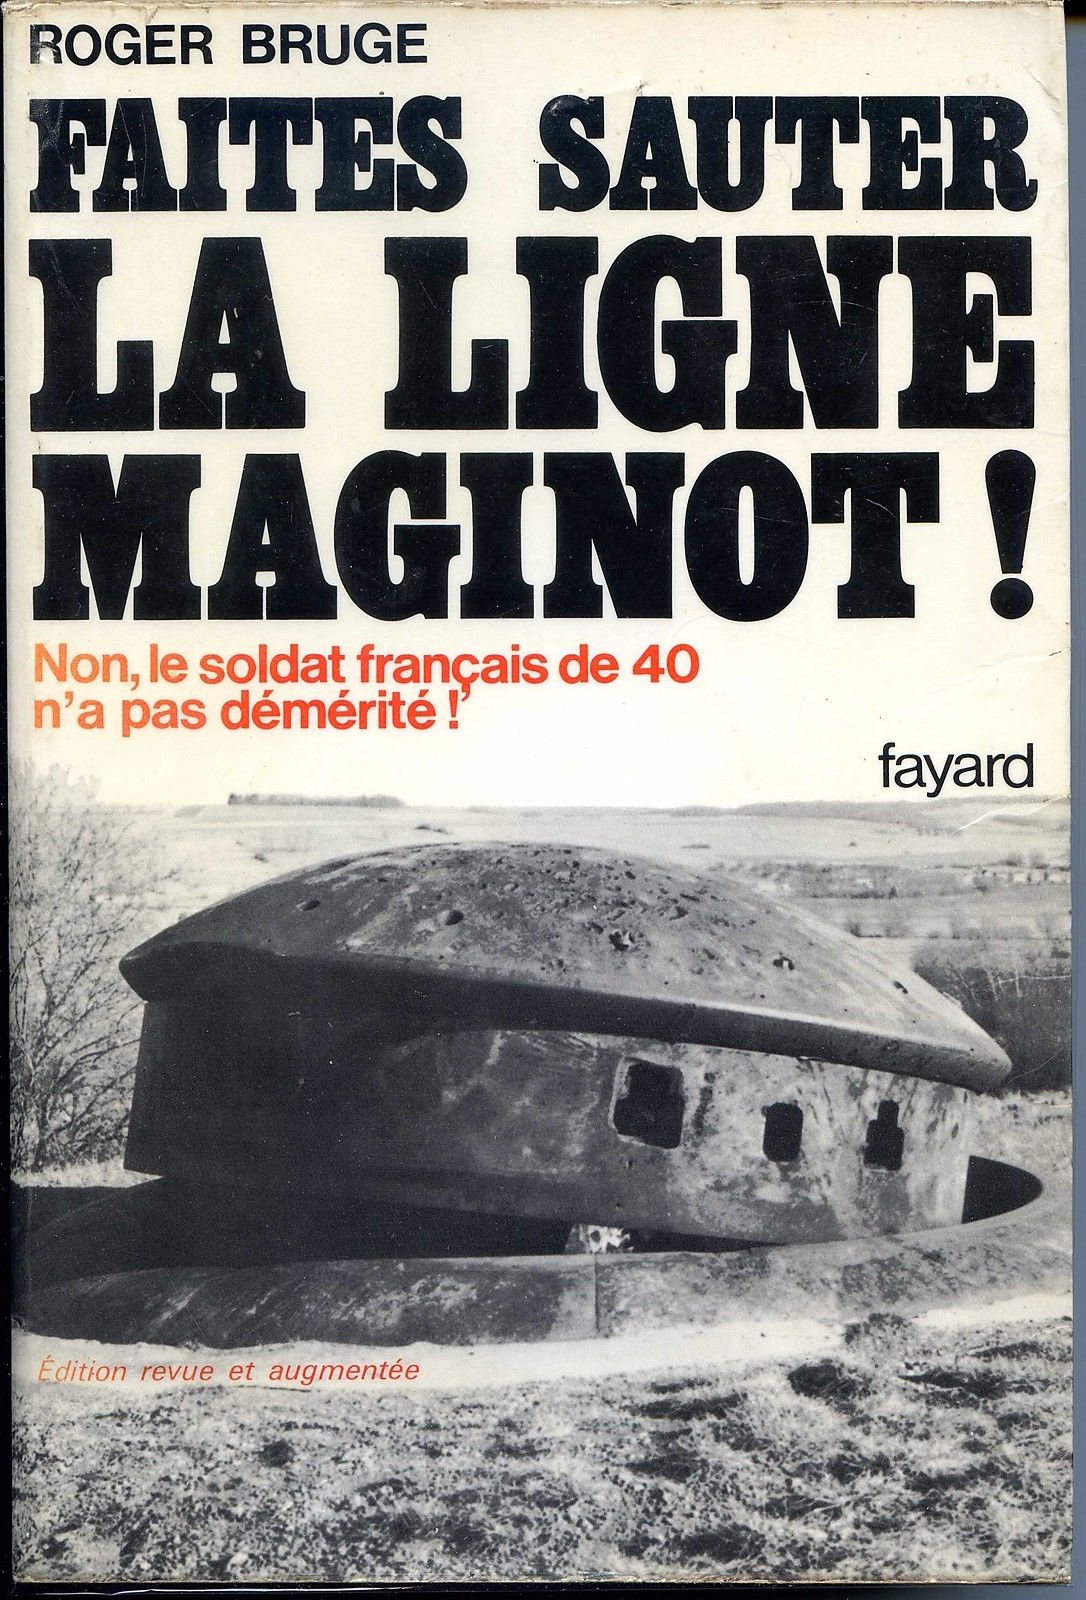 Ligne Maginot - Histoire de la ligne Maginot - Volume 1 - Faites sauter la ligne Maginot (BRUGE Roger) - BRUGE Roger